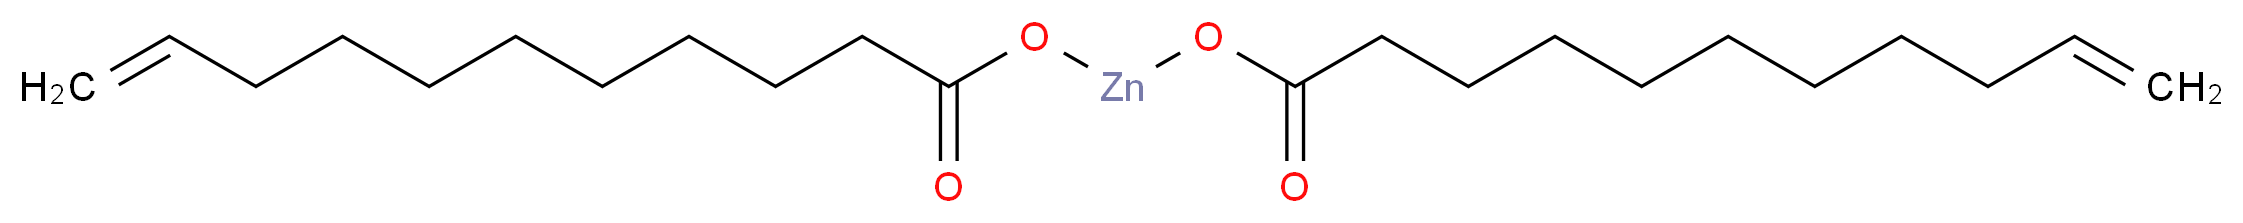 Zinc undecylenate_Molecular_structure_CAS_557-08-4)